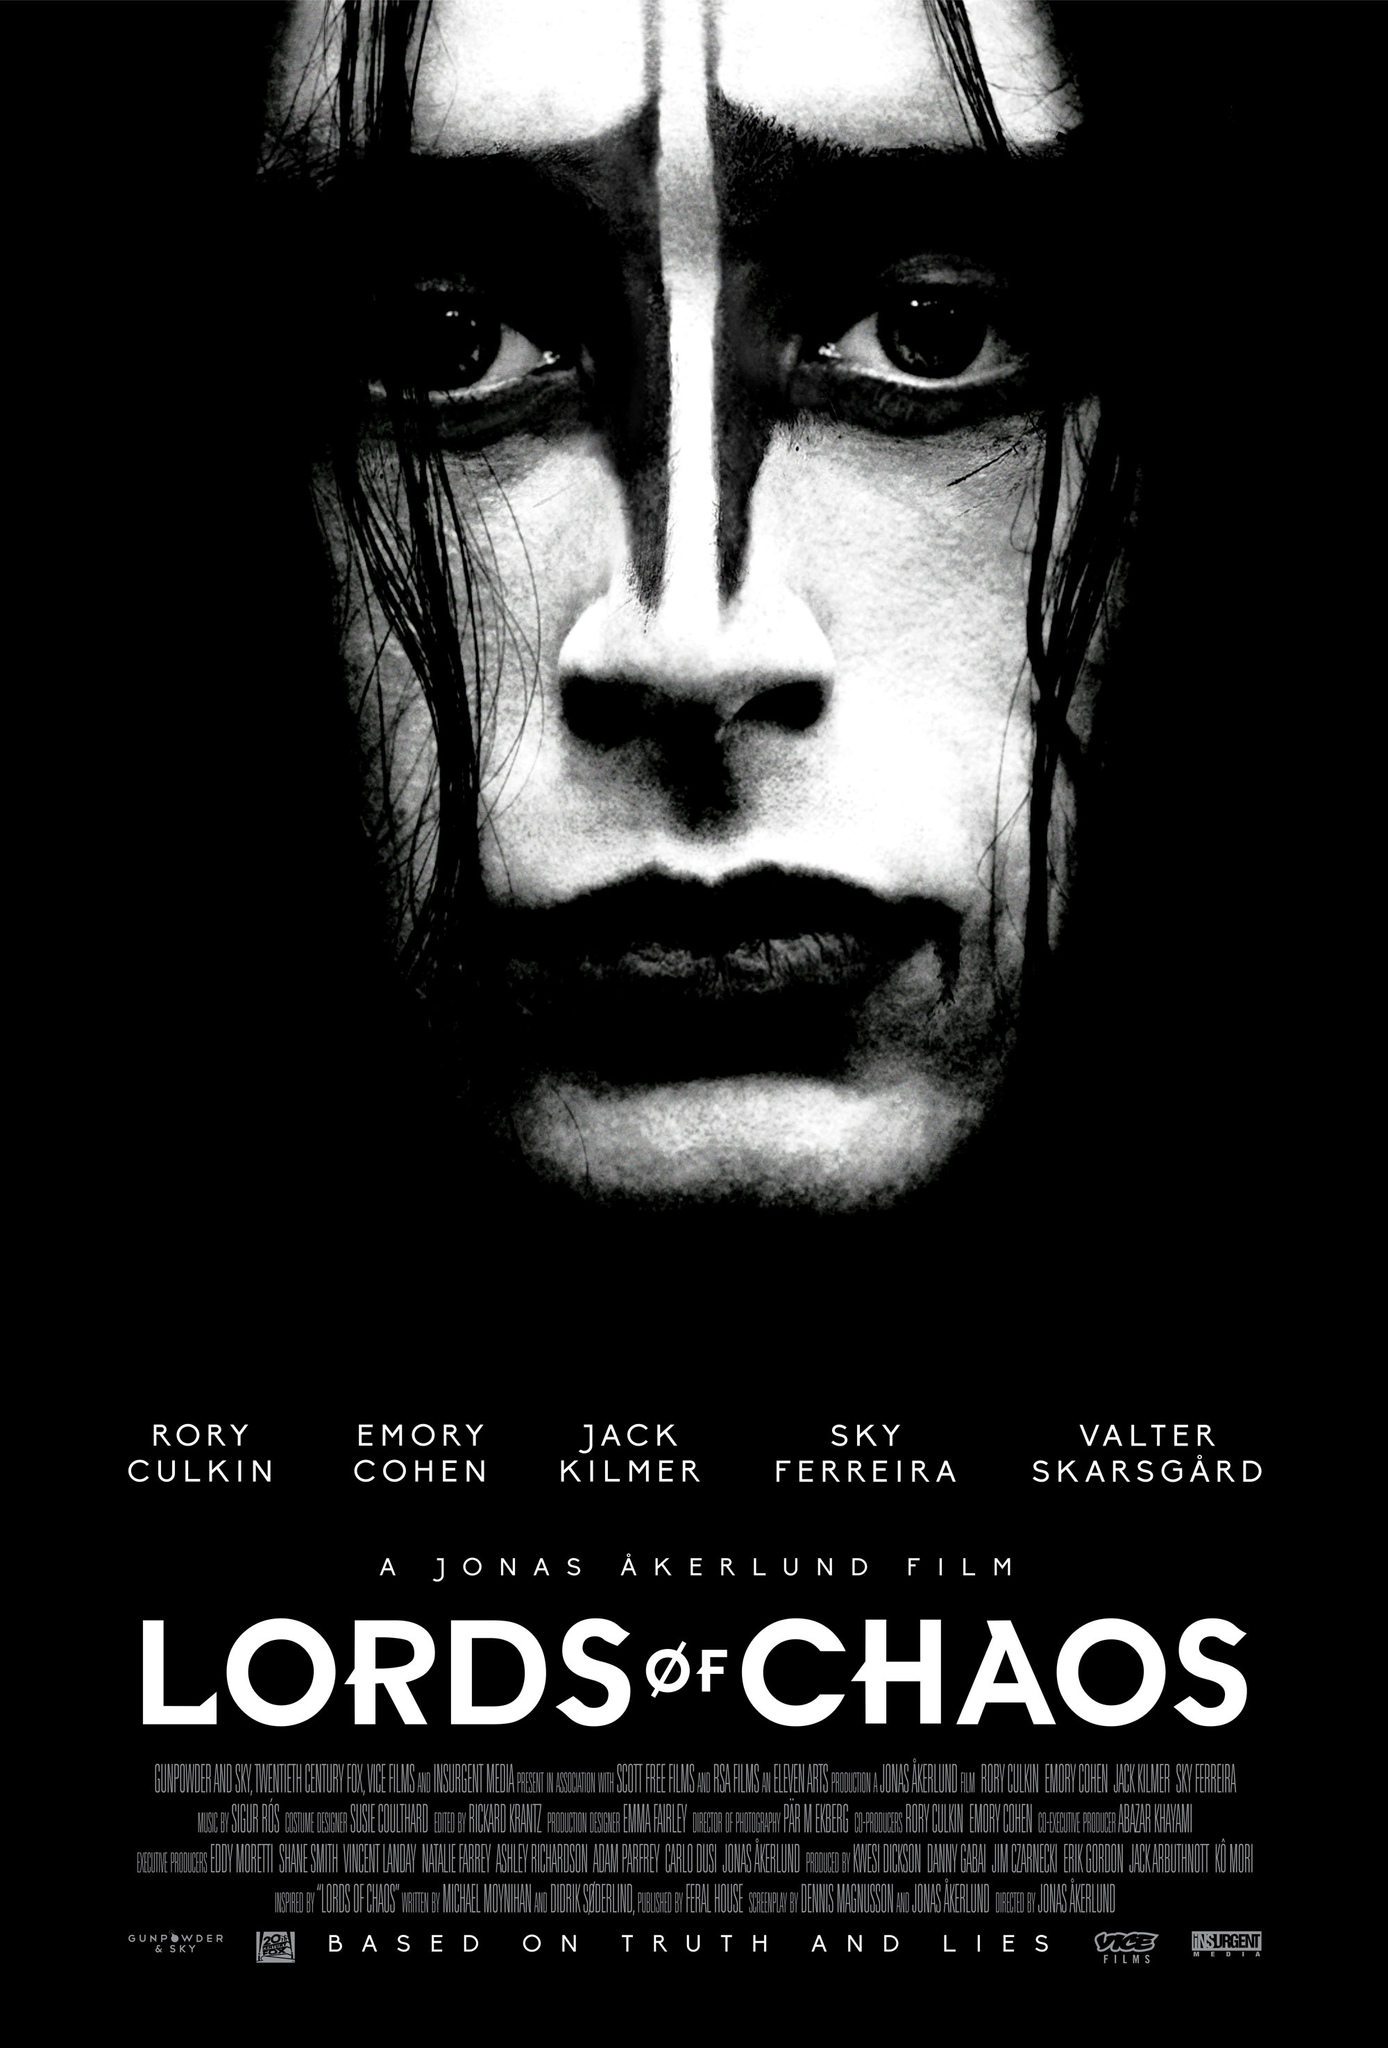 Nonton film Lords of Chaos layarkaca21 indoxx1 ganool online streaming terbaru